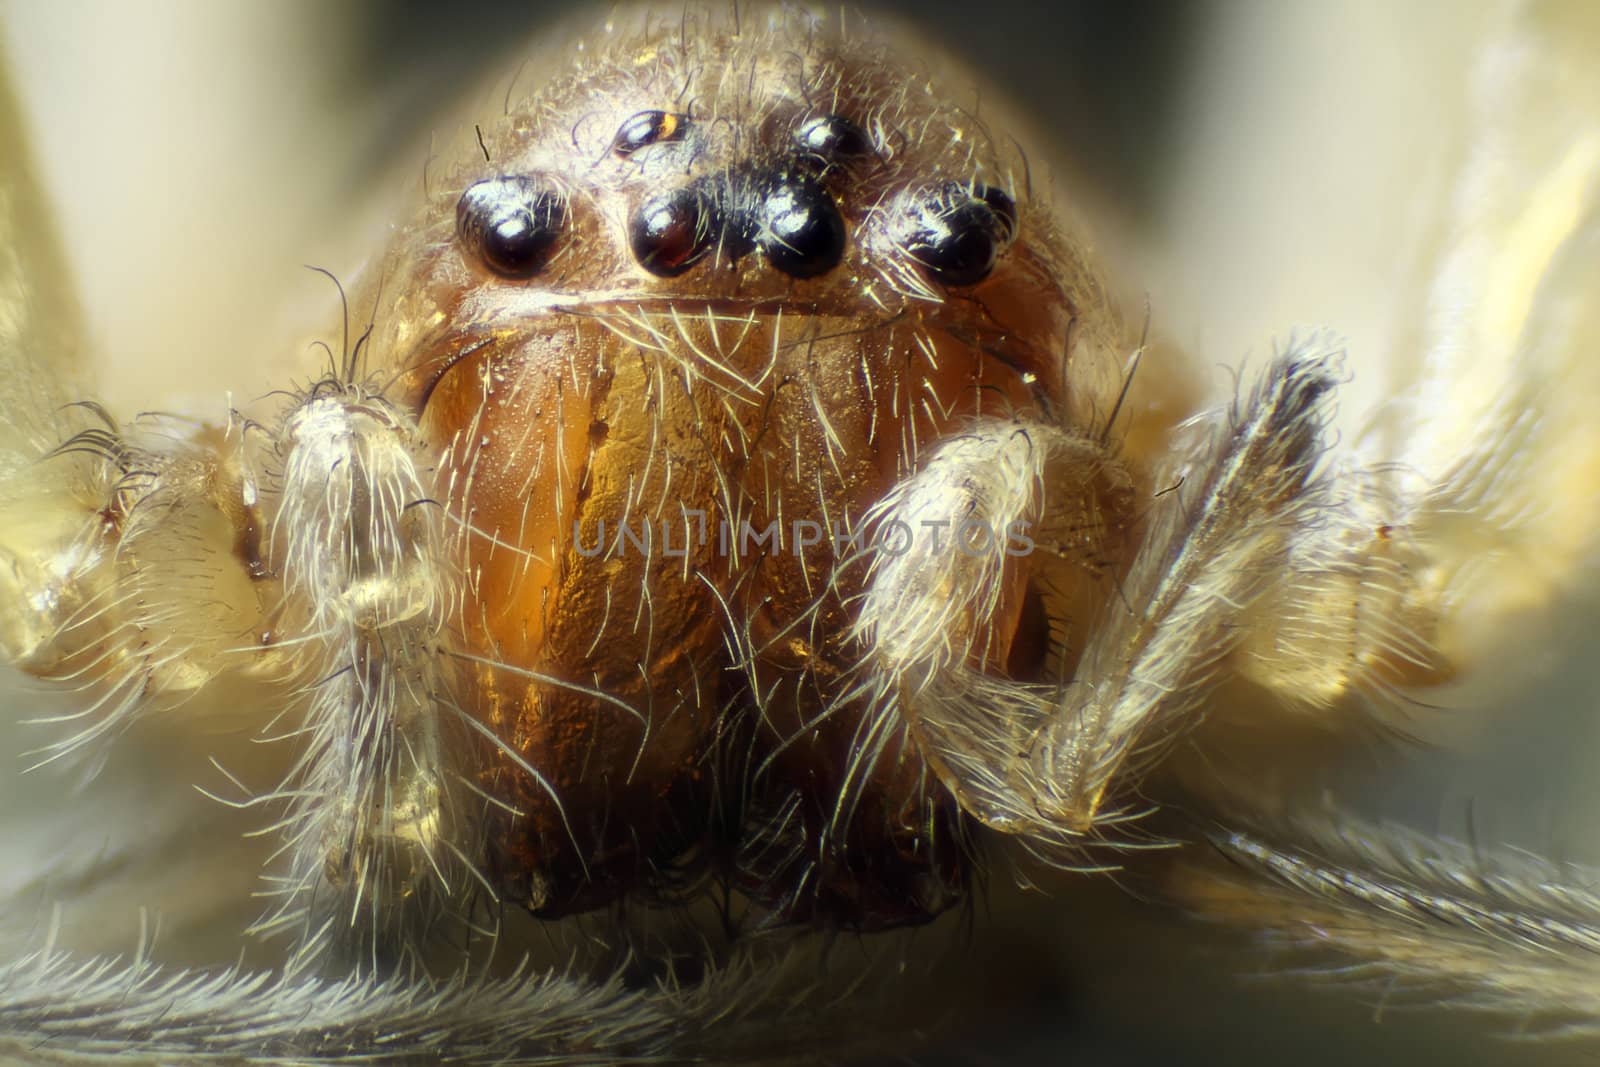 Spider under the microscope (Araneae, Arane)
